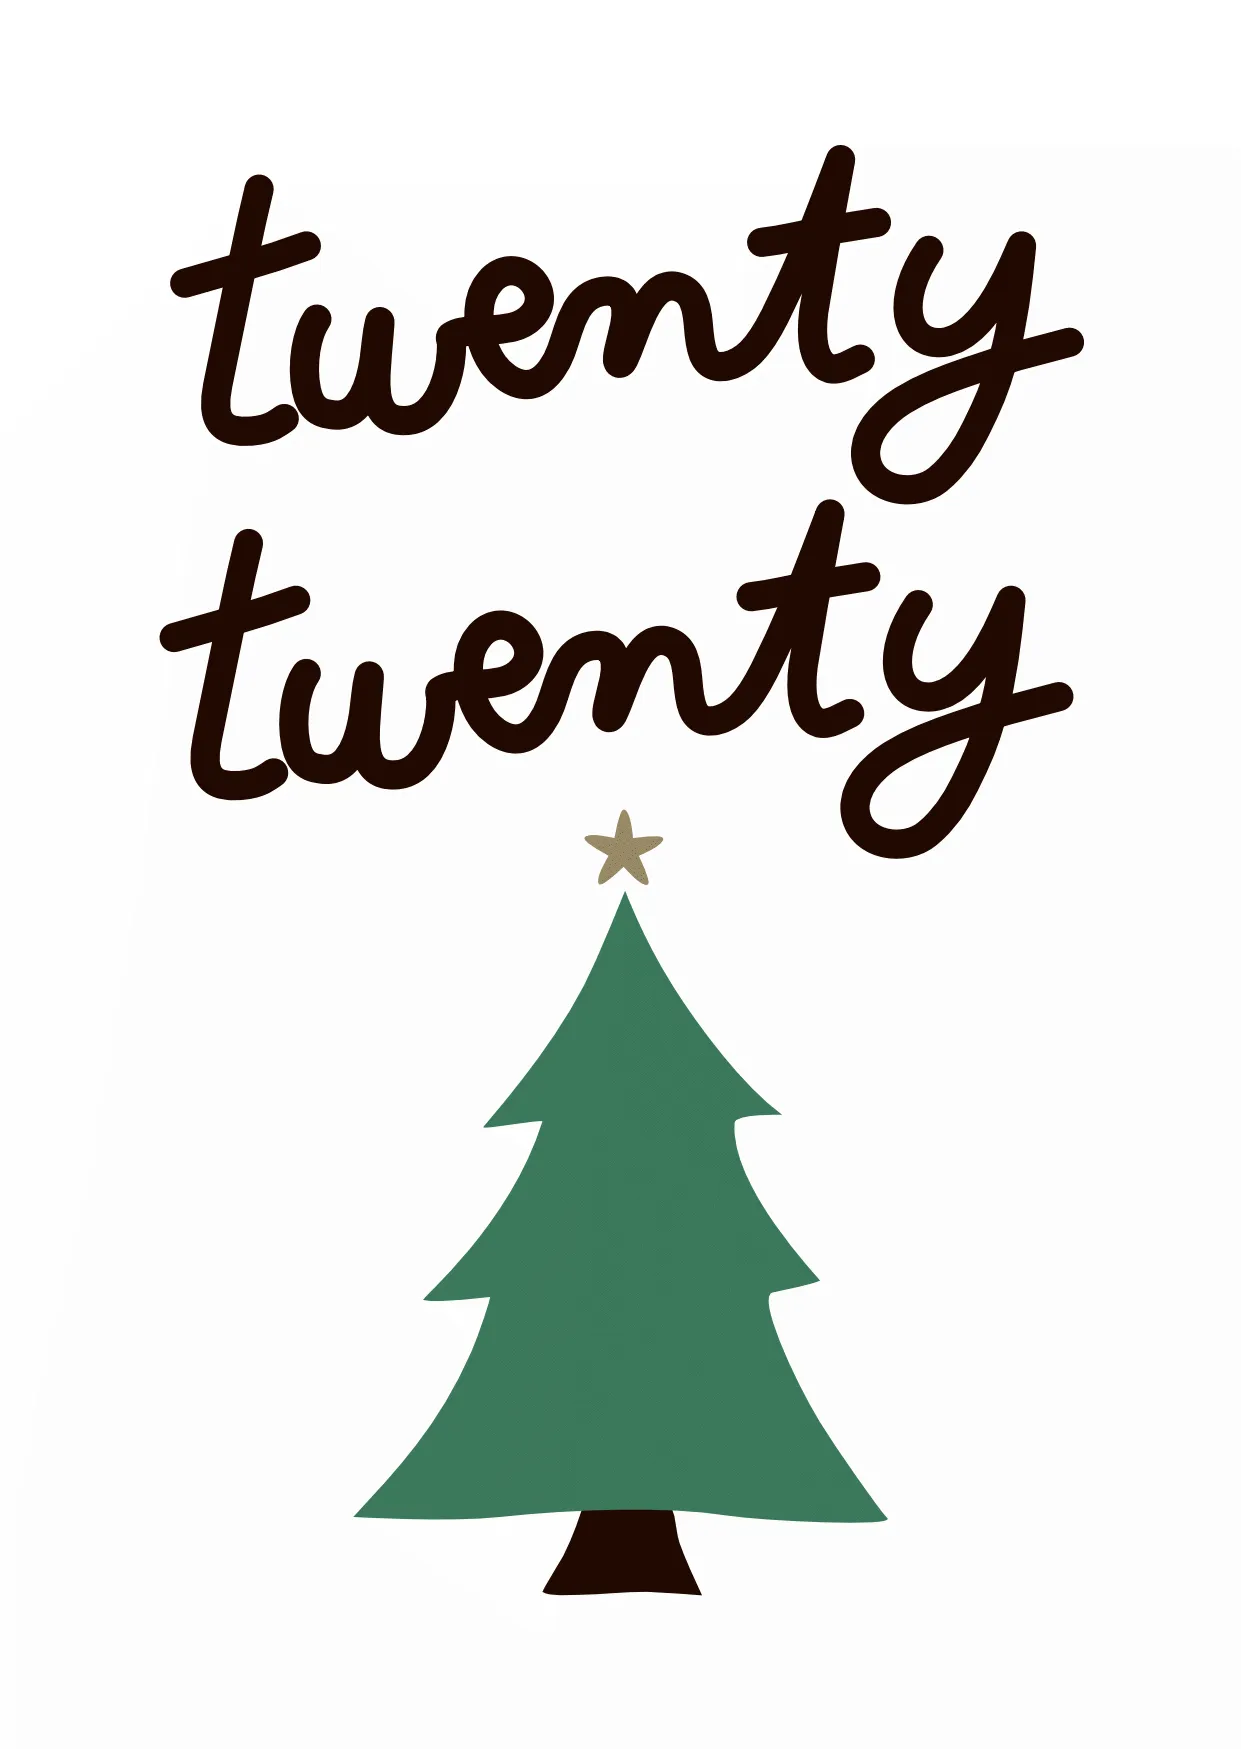 A card with “Twenty Twenty” hand-written and an illustration of a Christmas tree. To be read “Twenty Twenty Tree”